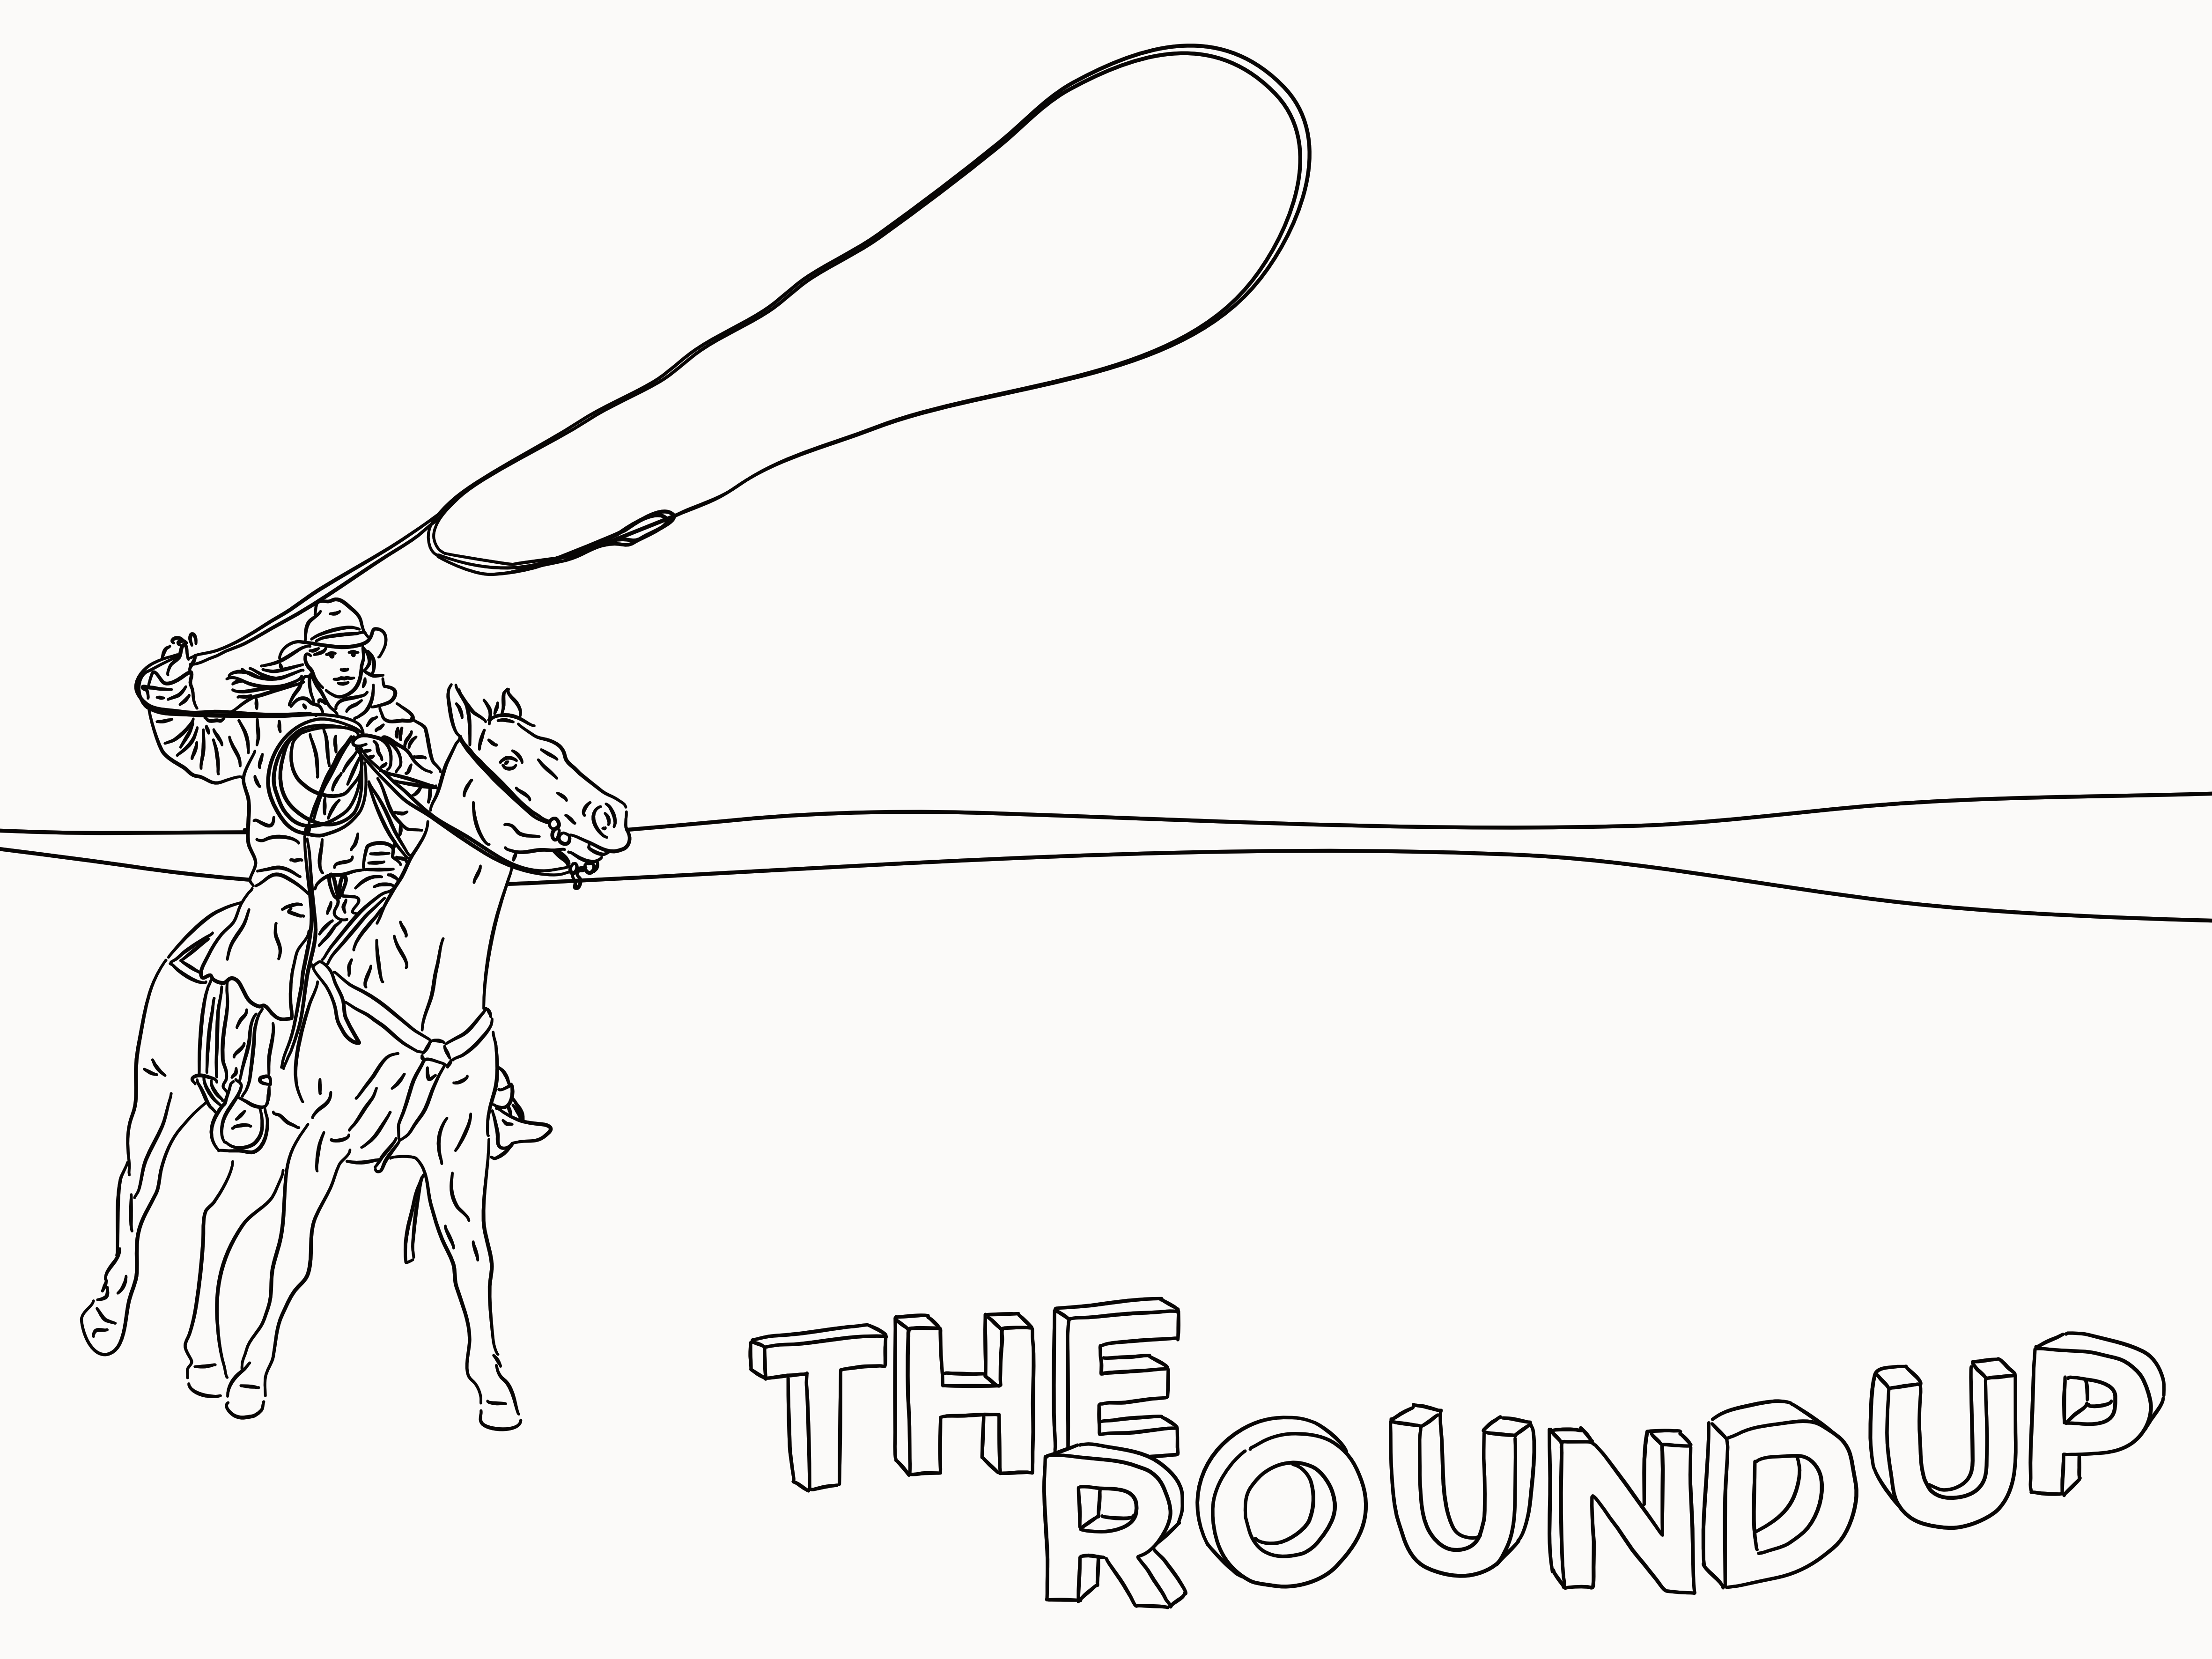 Roundup illustration